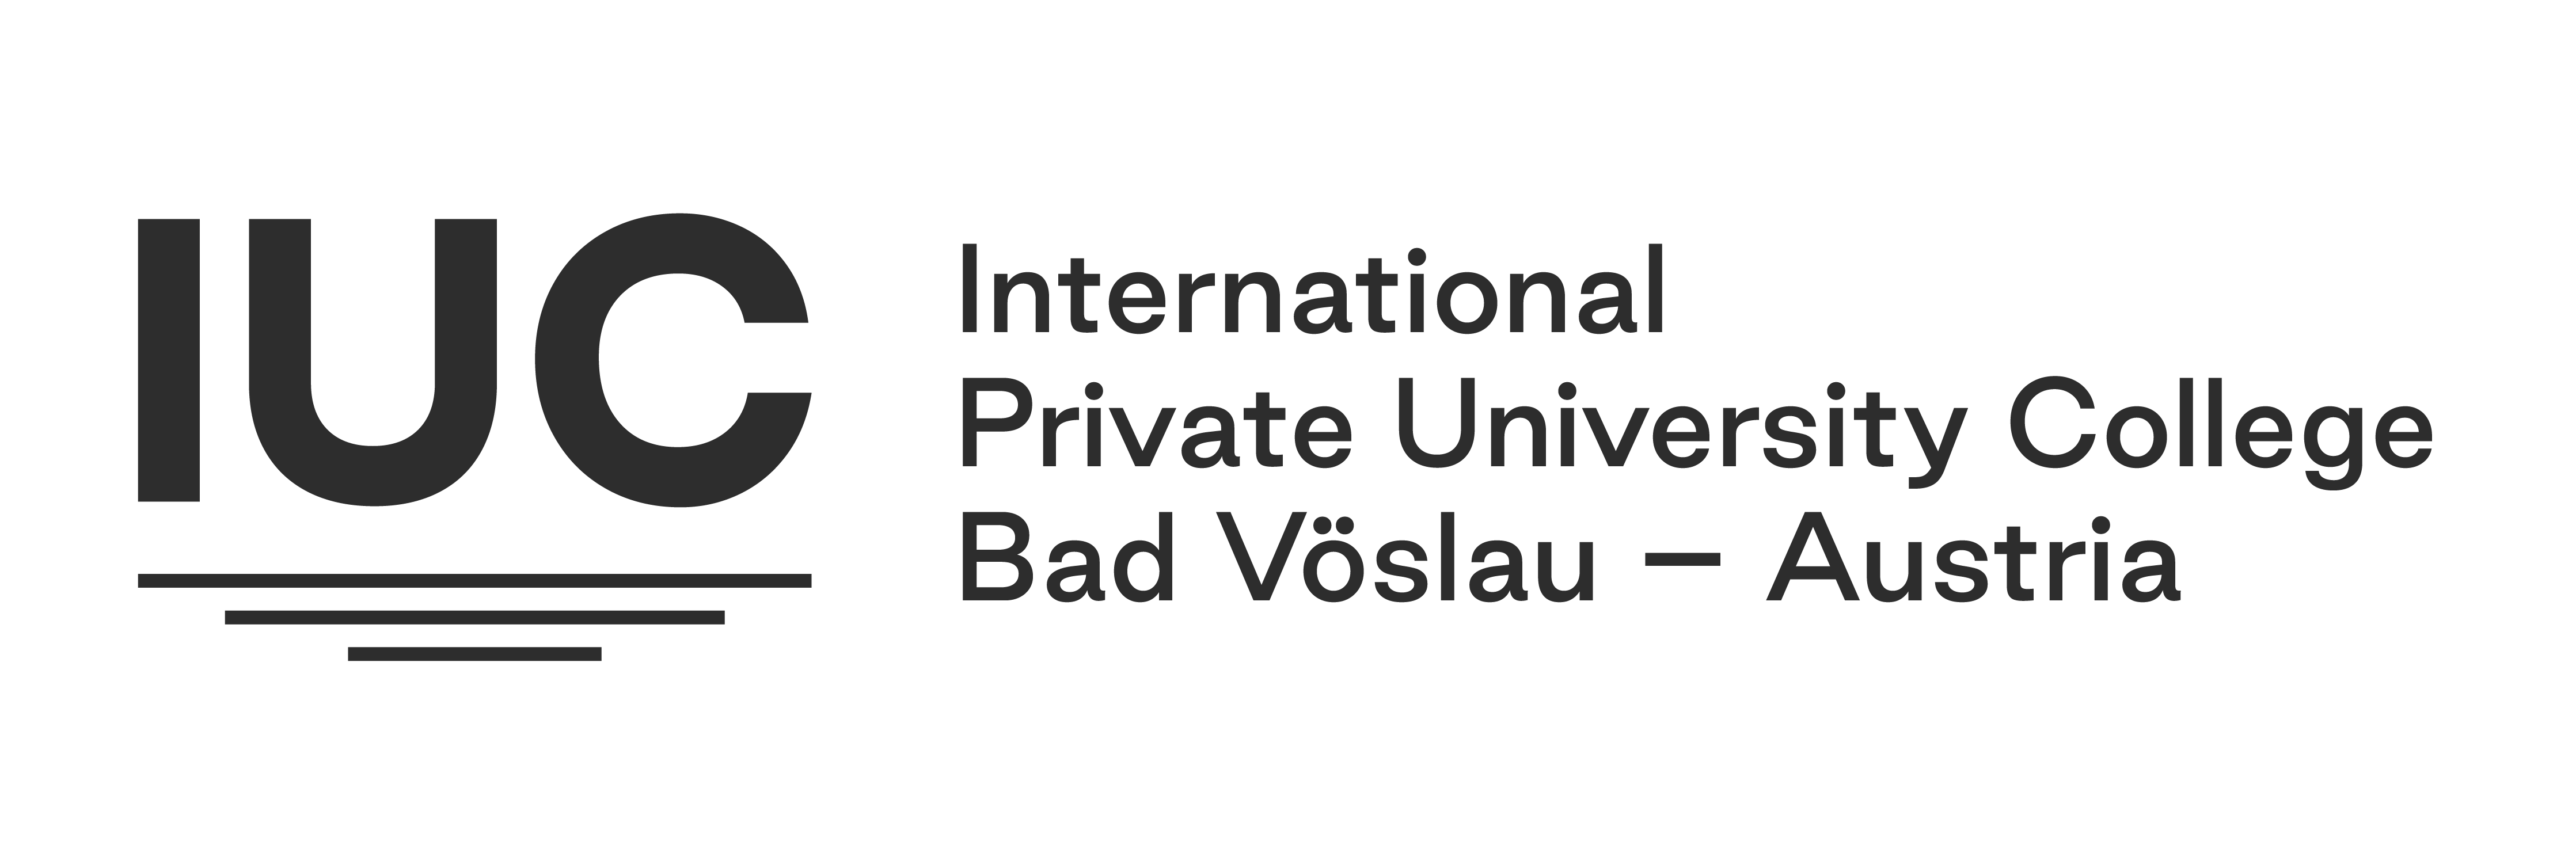 IUC-Logo-Horizontal-Transparent-Gray